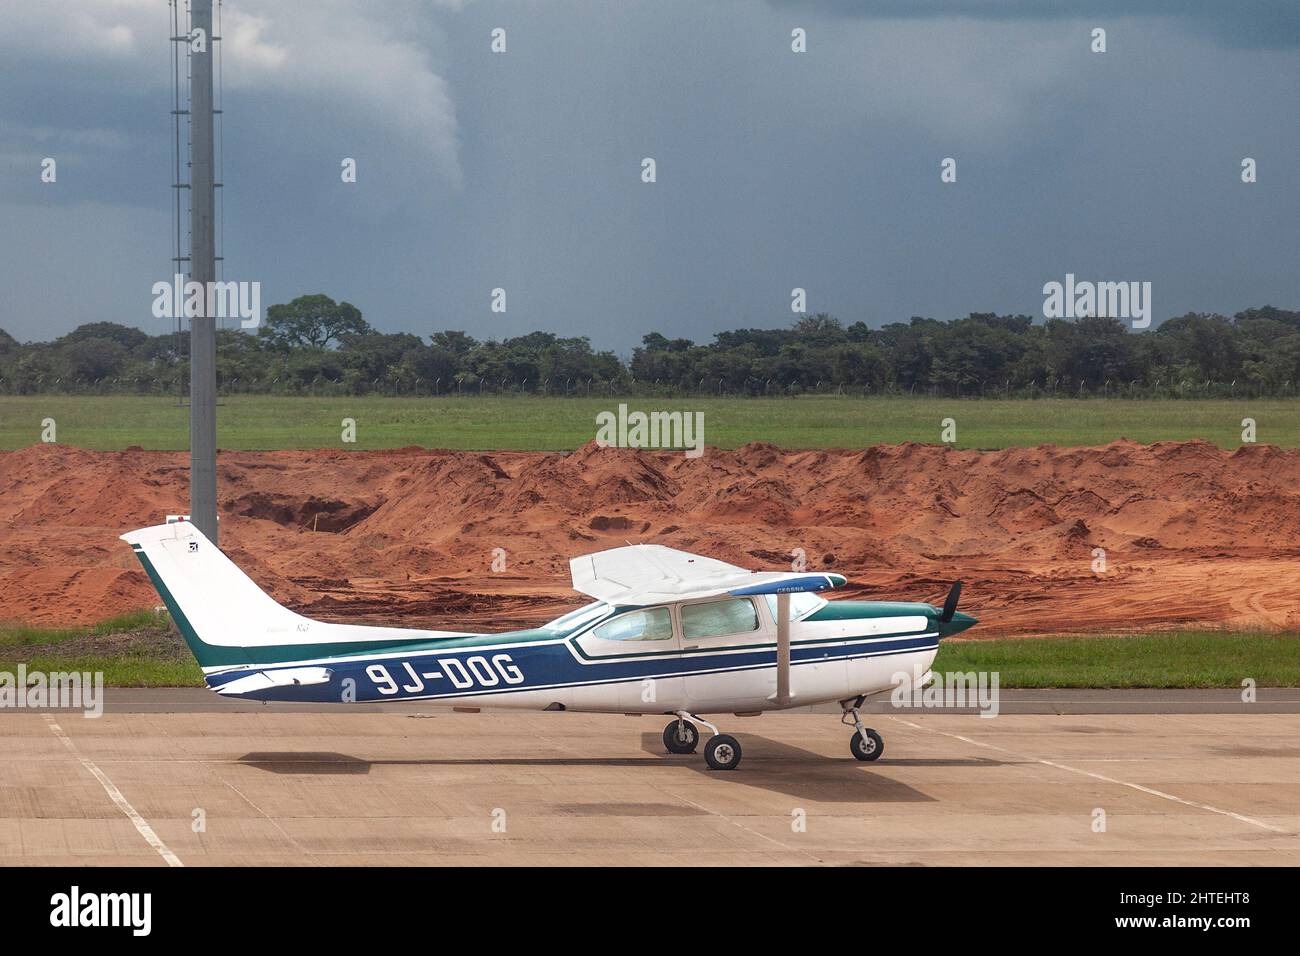 A 1978 Cessna 182 Skylane, registration #9J-DOG stationary on the apron at Livinstone International Airport, Zambia Stock Photo